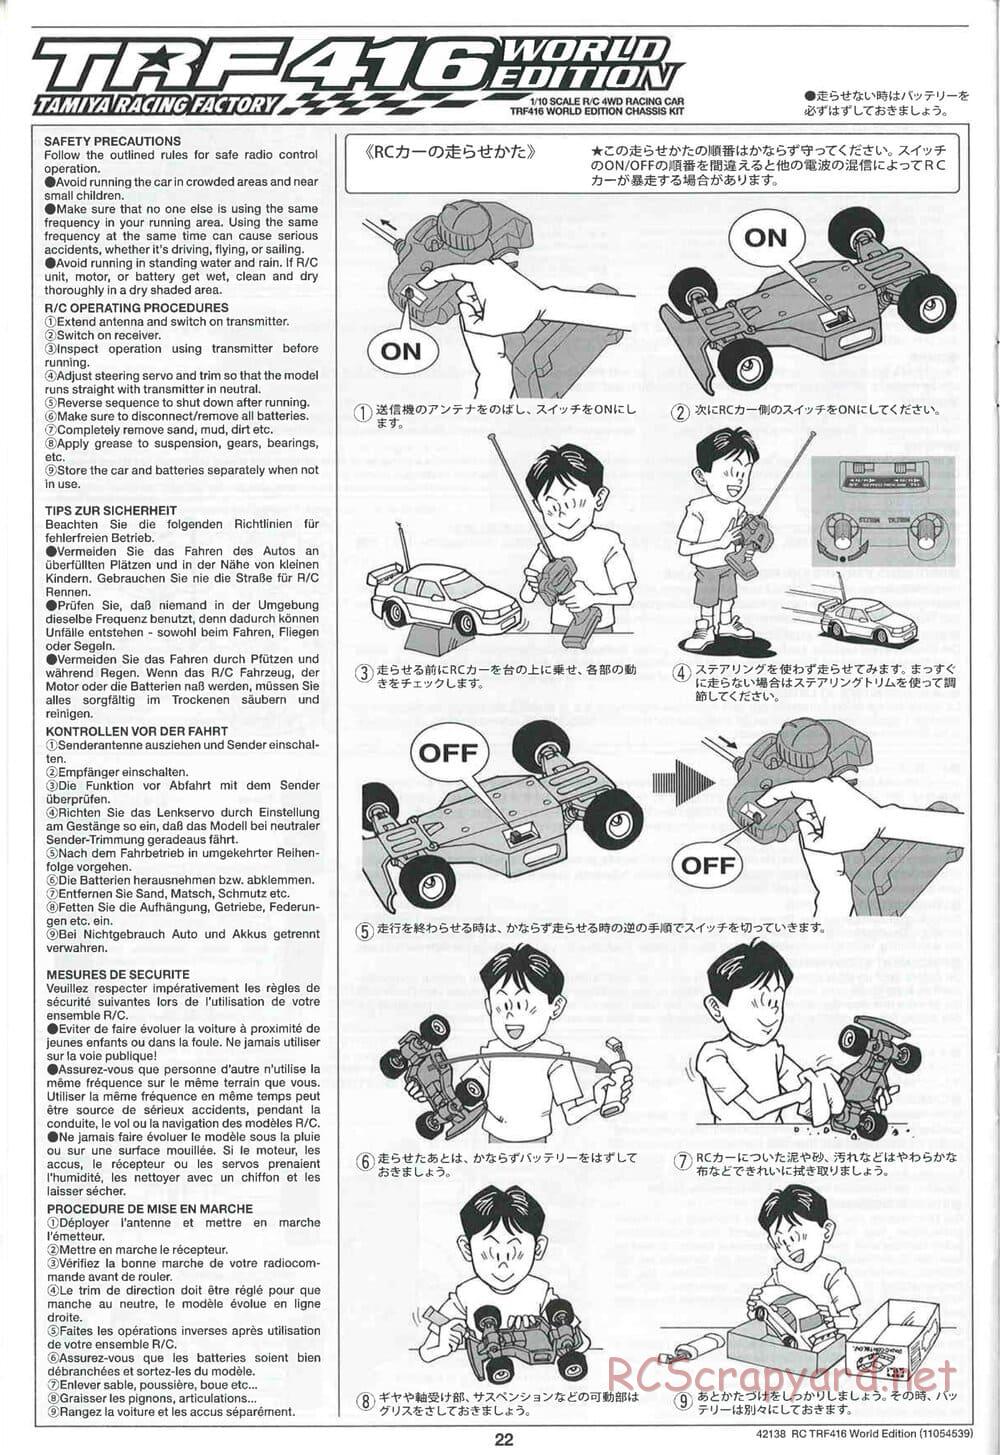 Tamiya - TRF416 World Edition Chassis - Manual - Page 22